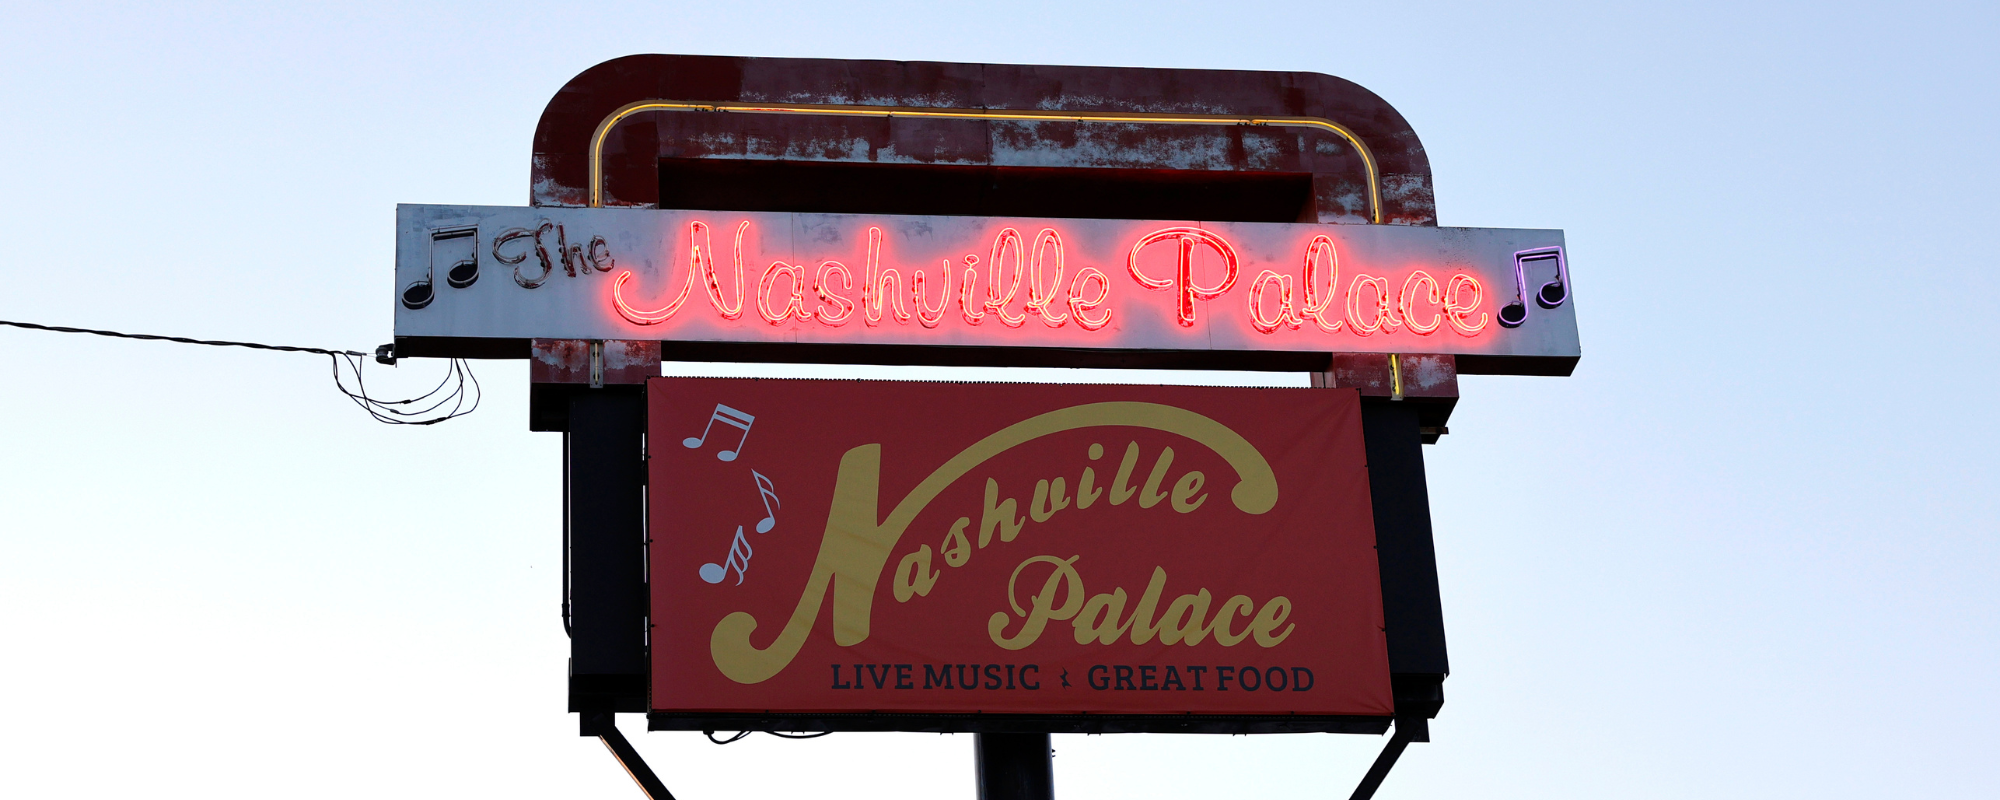 Behind the Venue: The Honky Tonk Headquarters, Nashville Palace